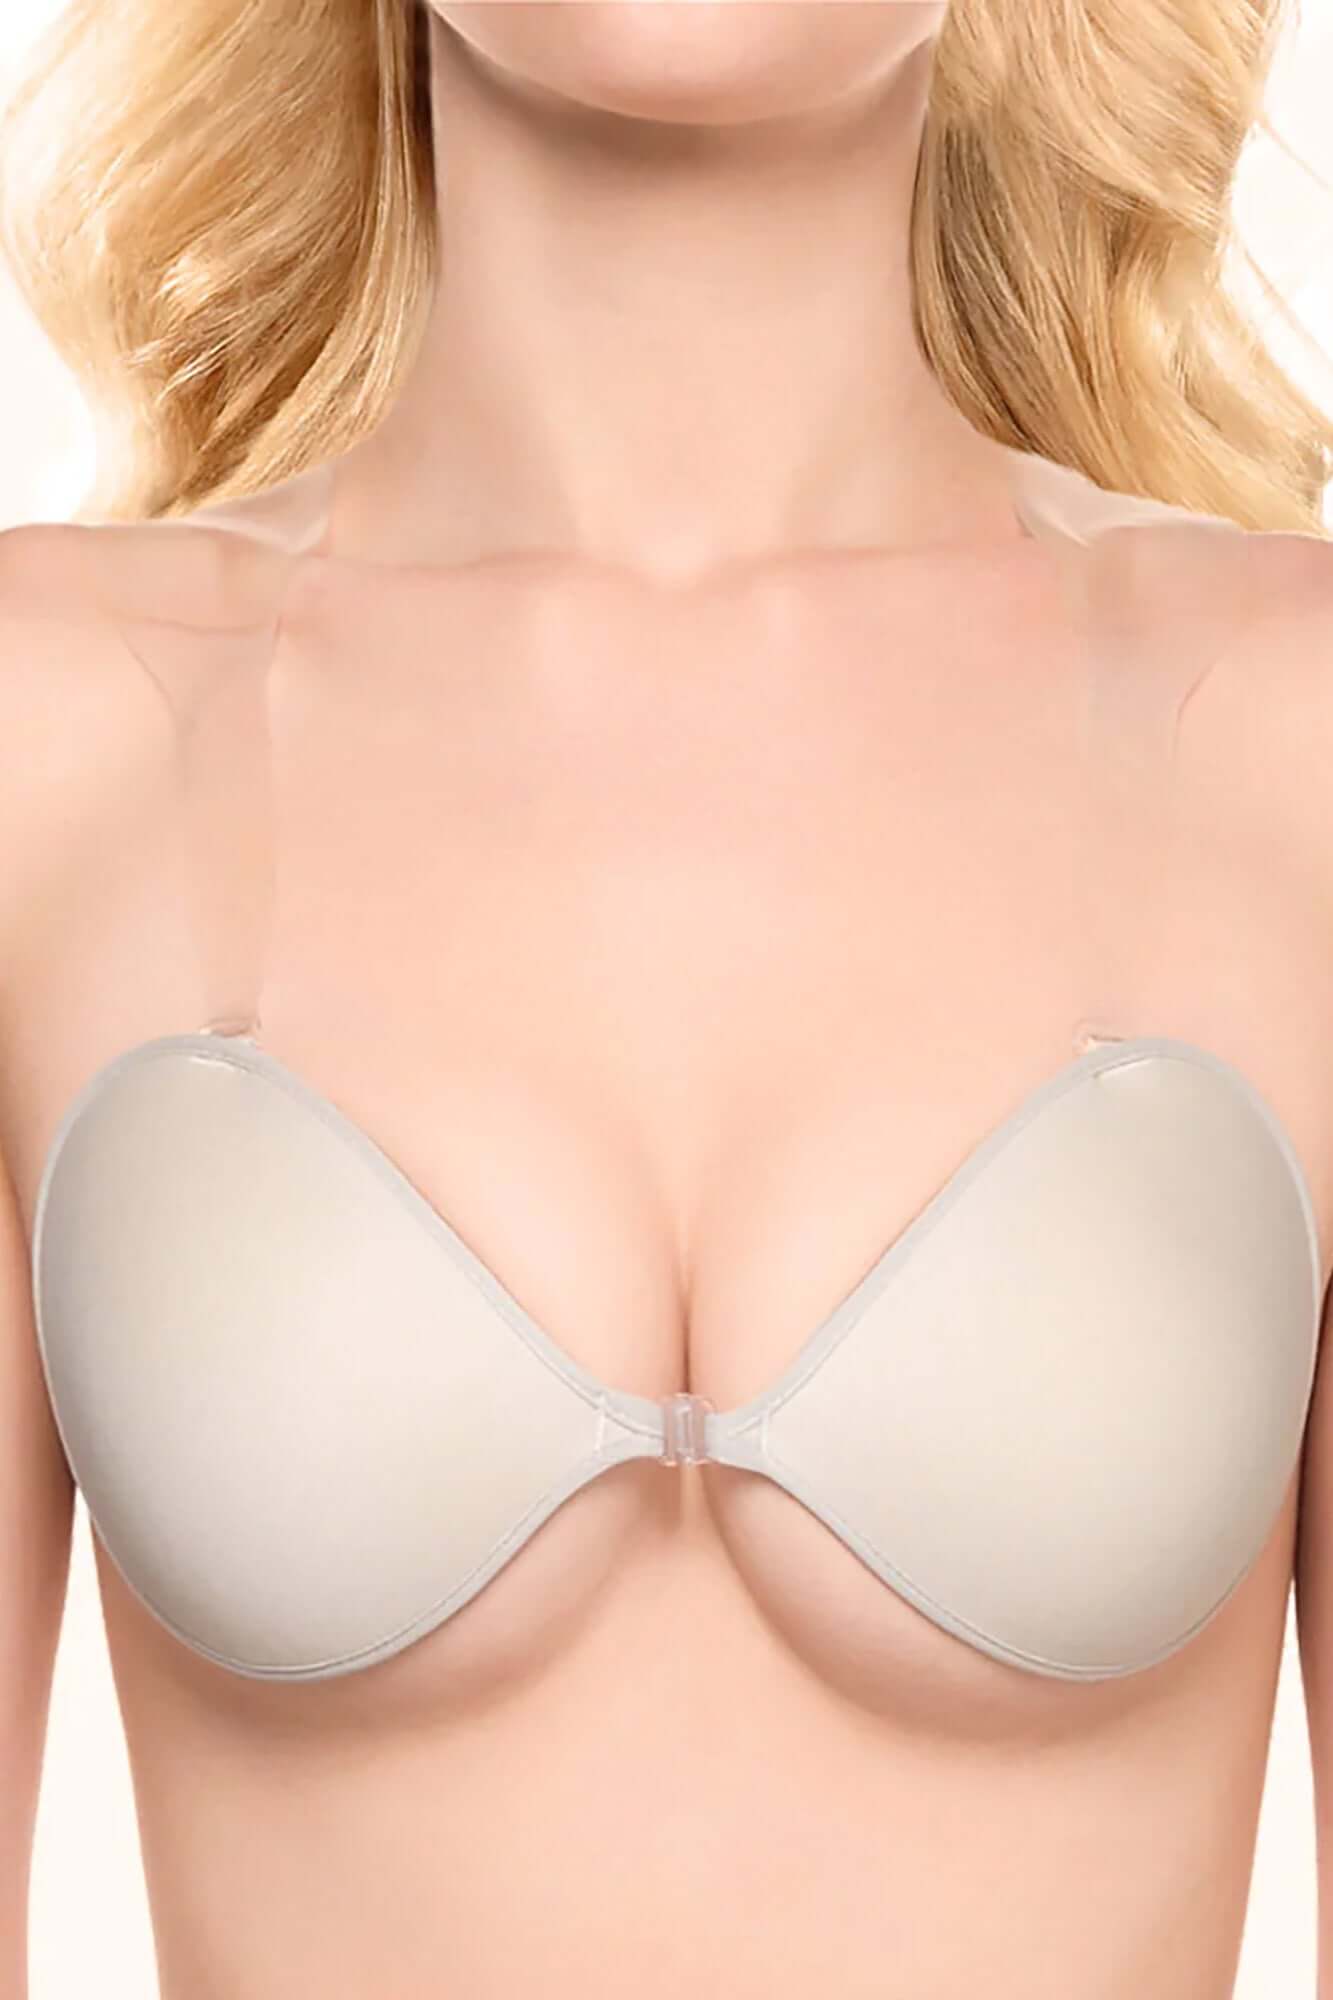 NuBra Adhesive Bras - Sticky boobs, Strapless, Backless bra at